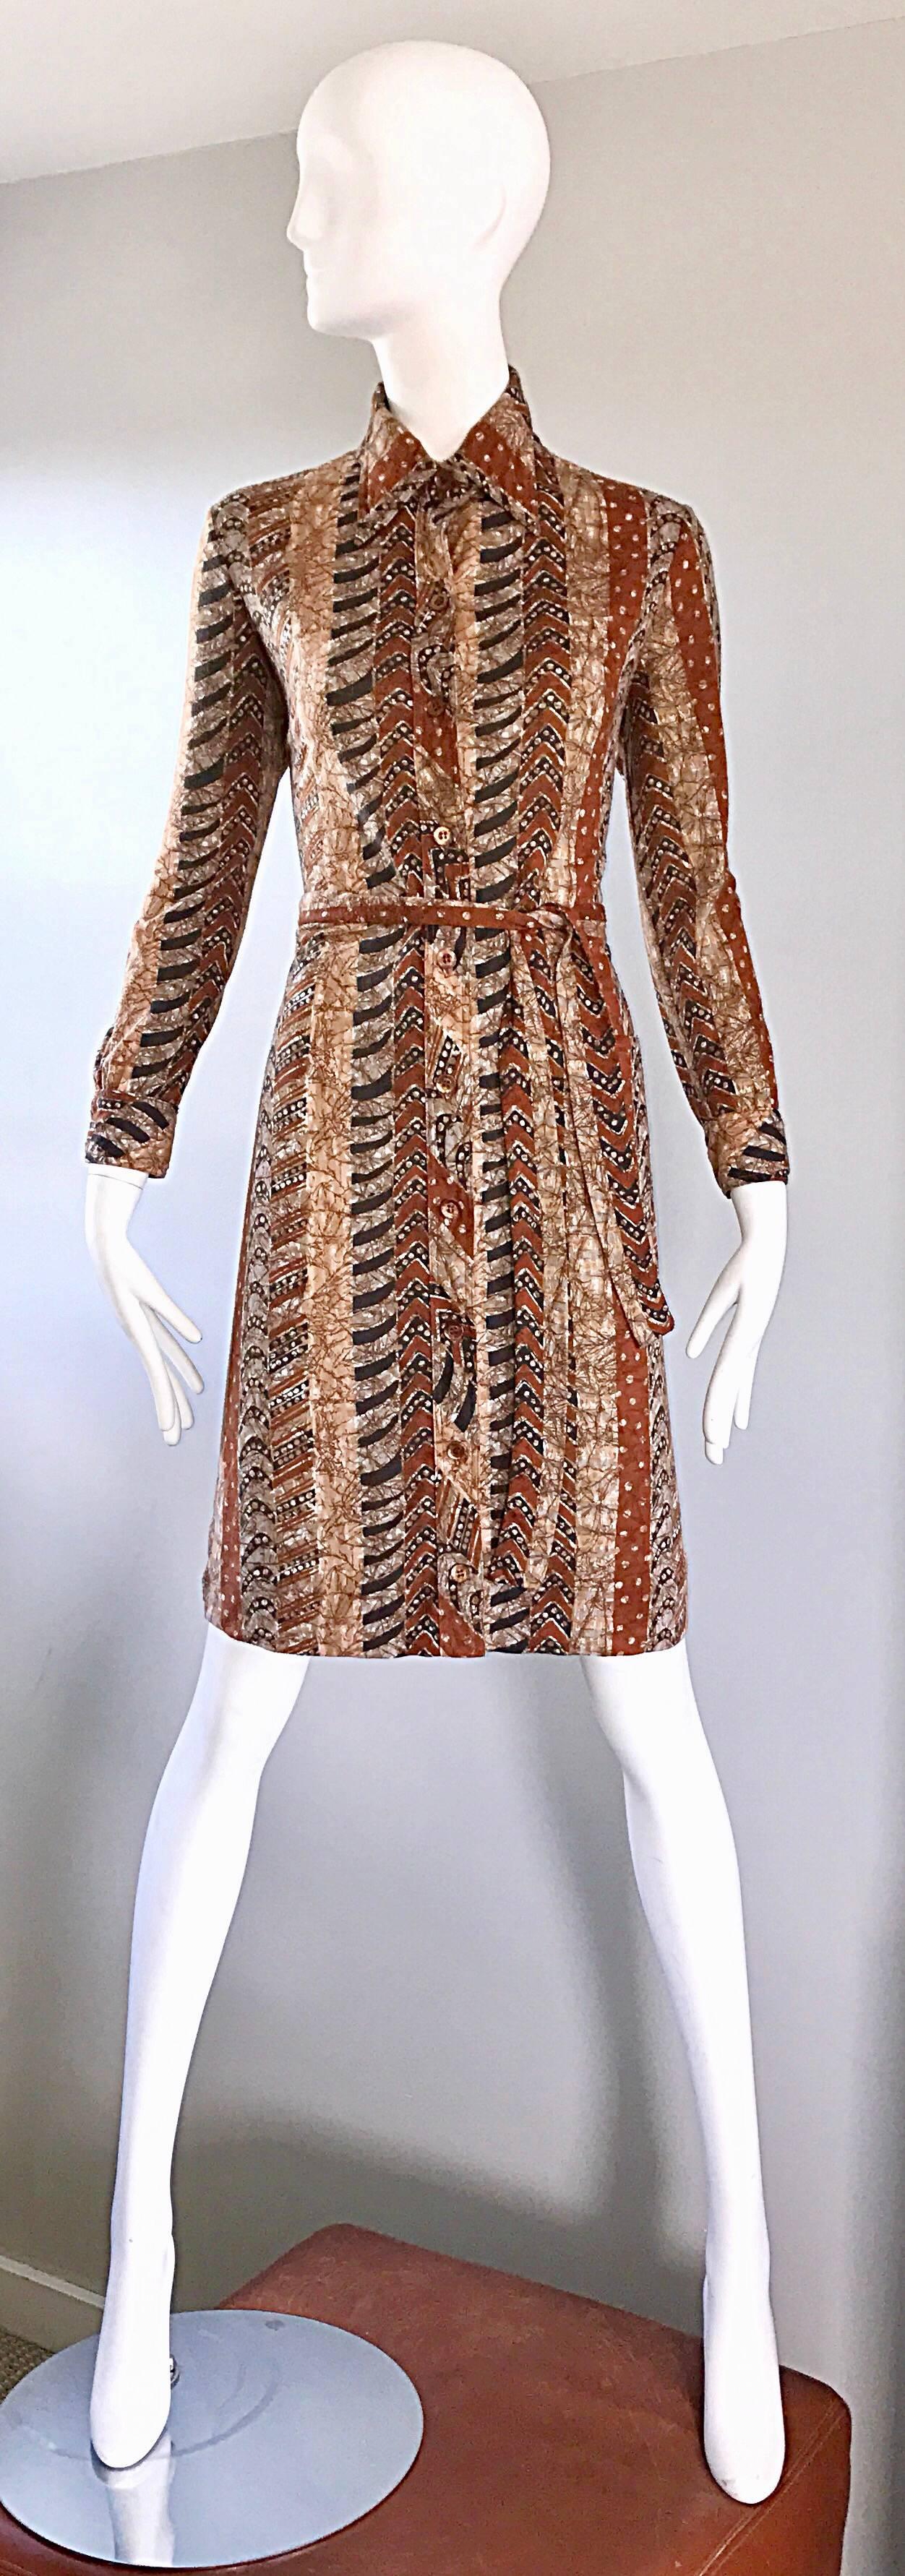 Bonwit Teller 1970s Batik Print Belted Cotton 70s Vintage Brown Safari Dress  For Sale 1